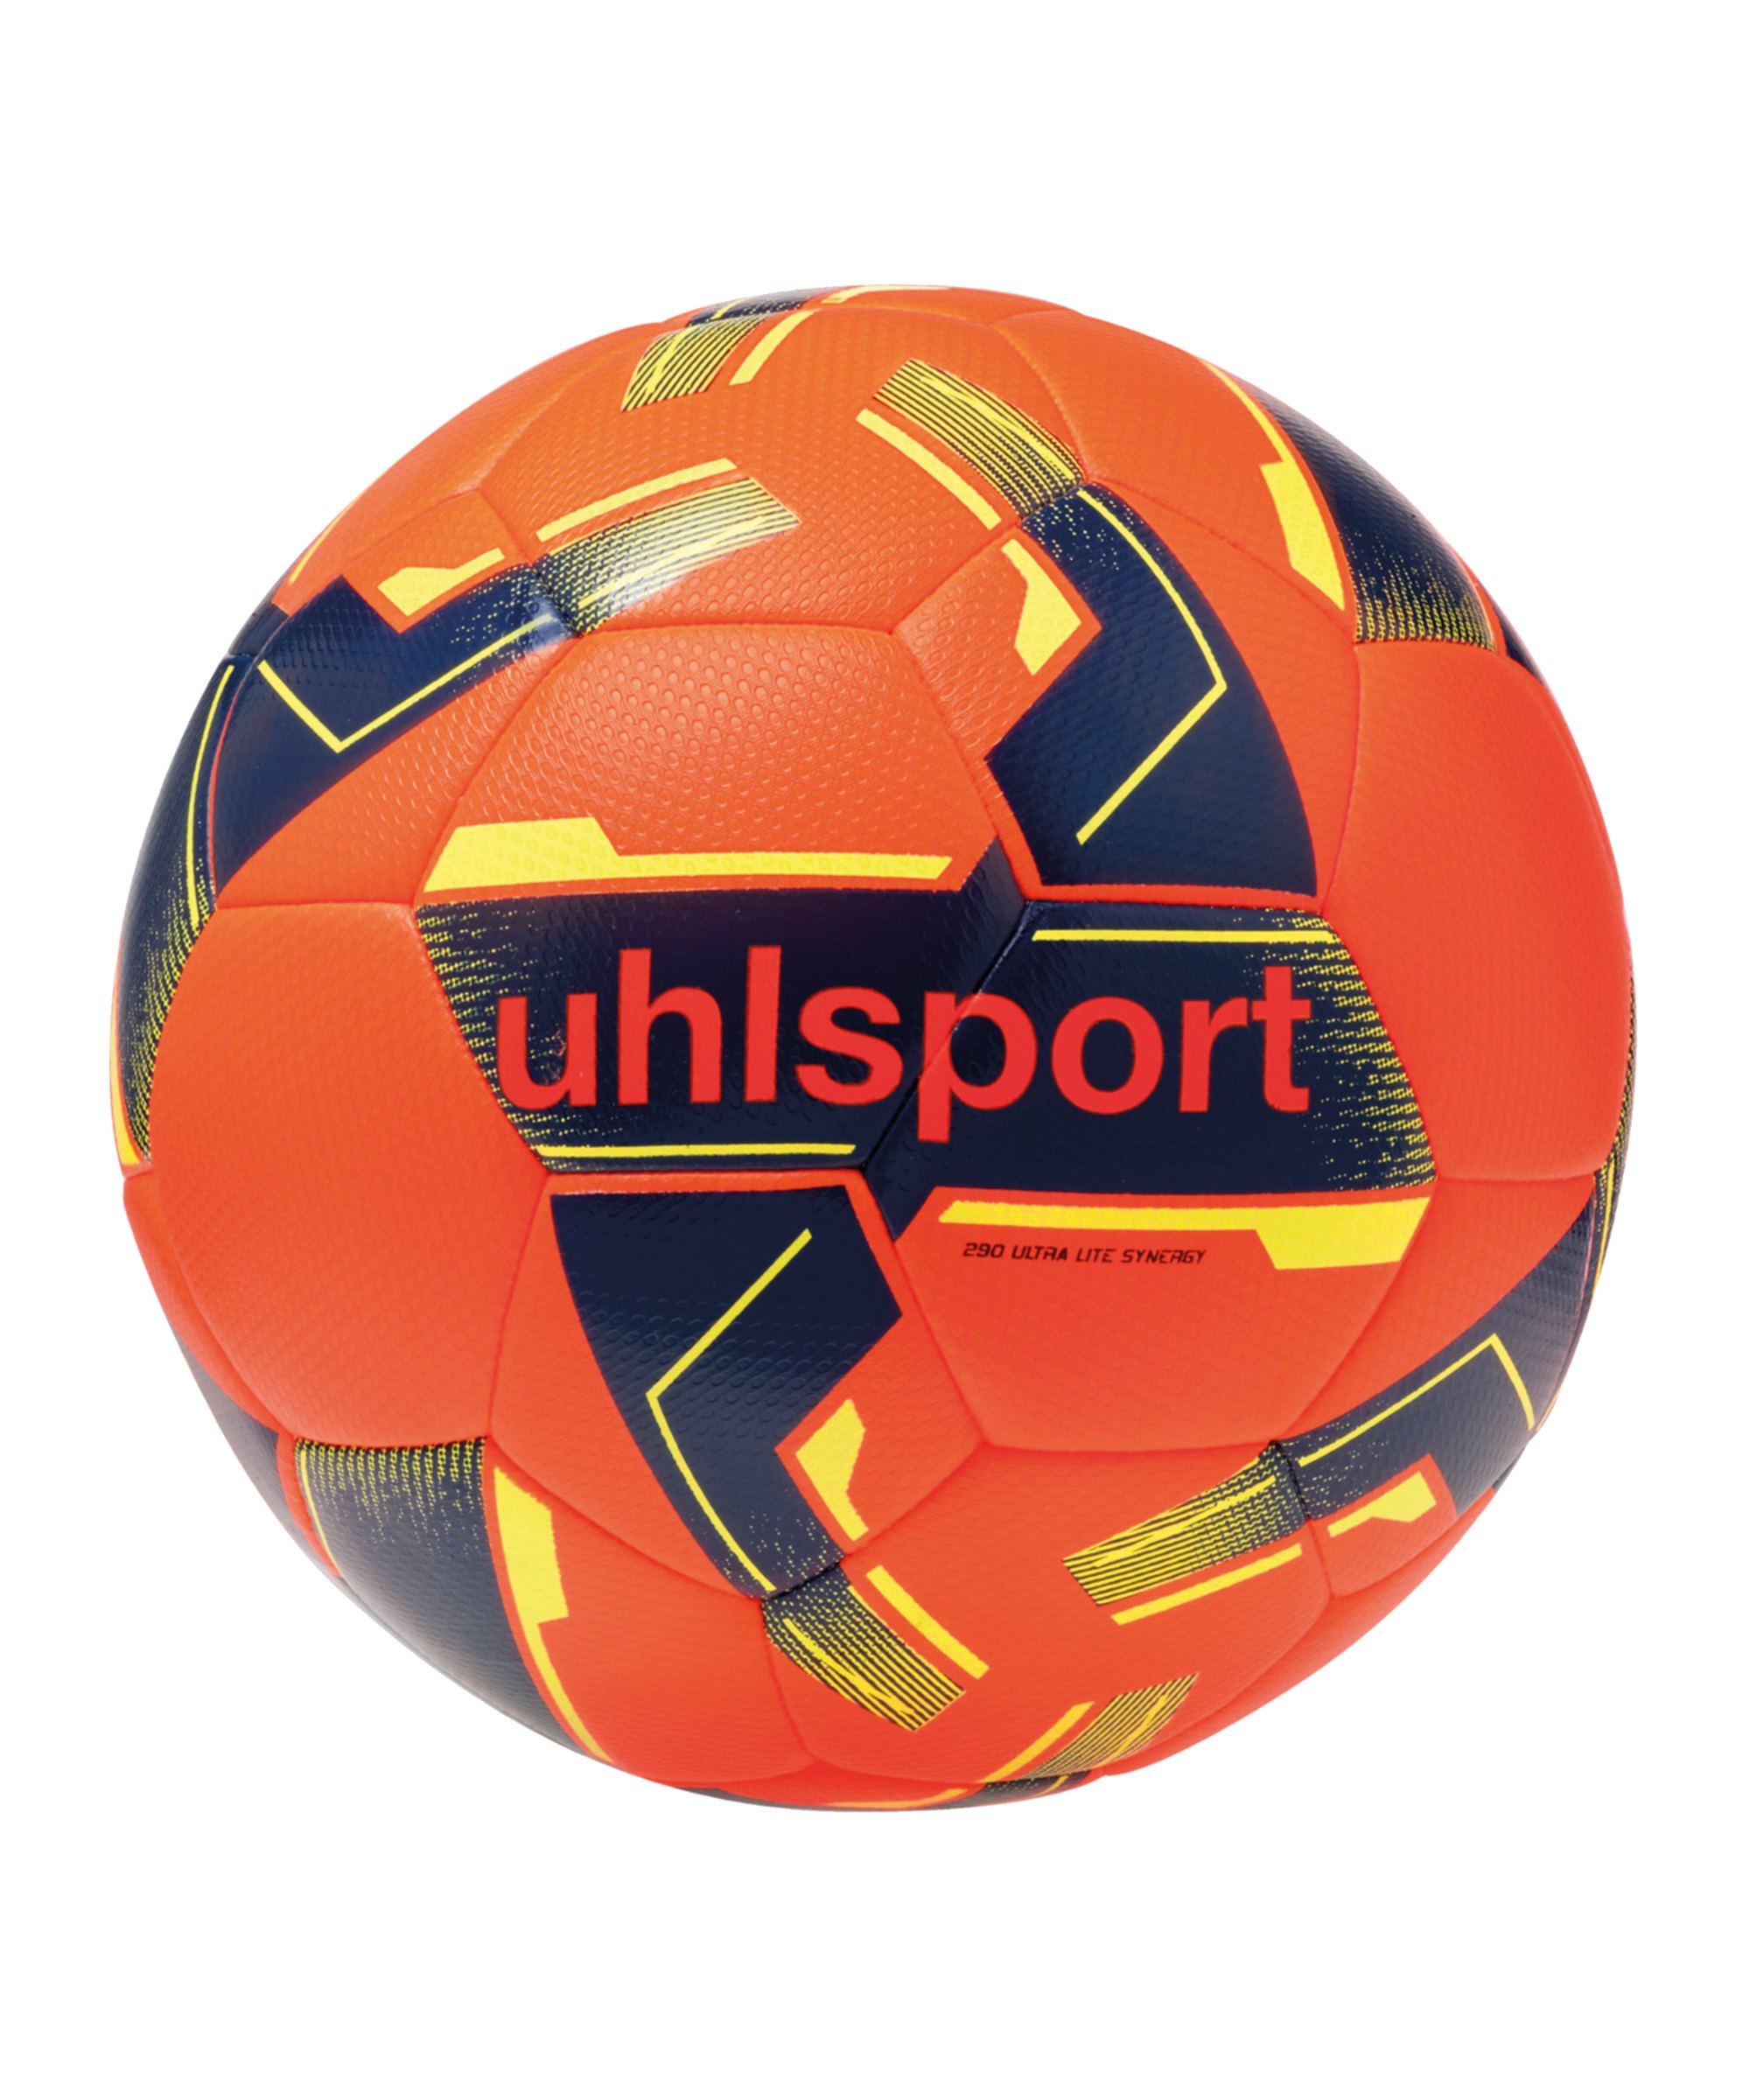 Uhlsport Synergy Ultra 290g Lightball Orange F01 - orange